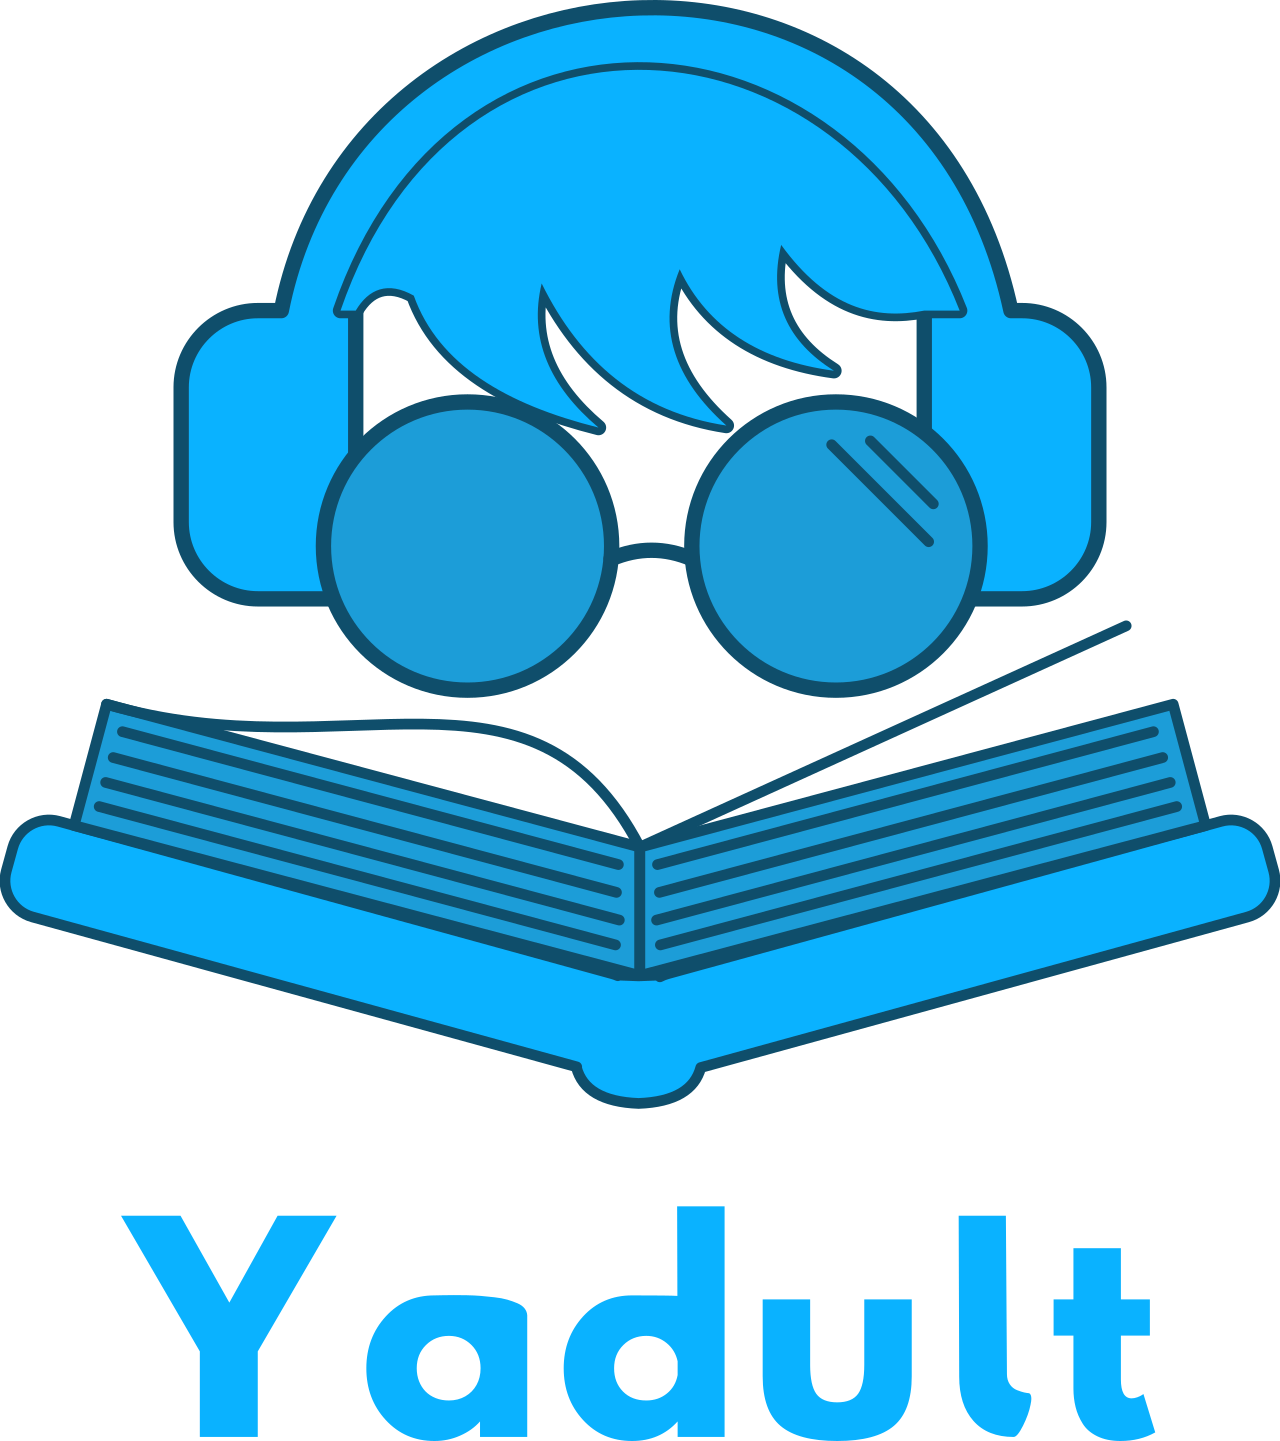 Yadult's web page